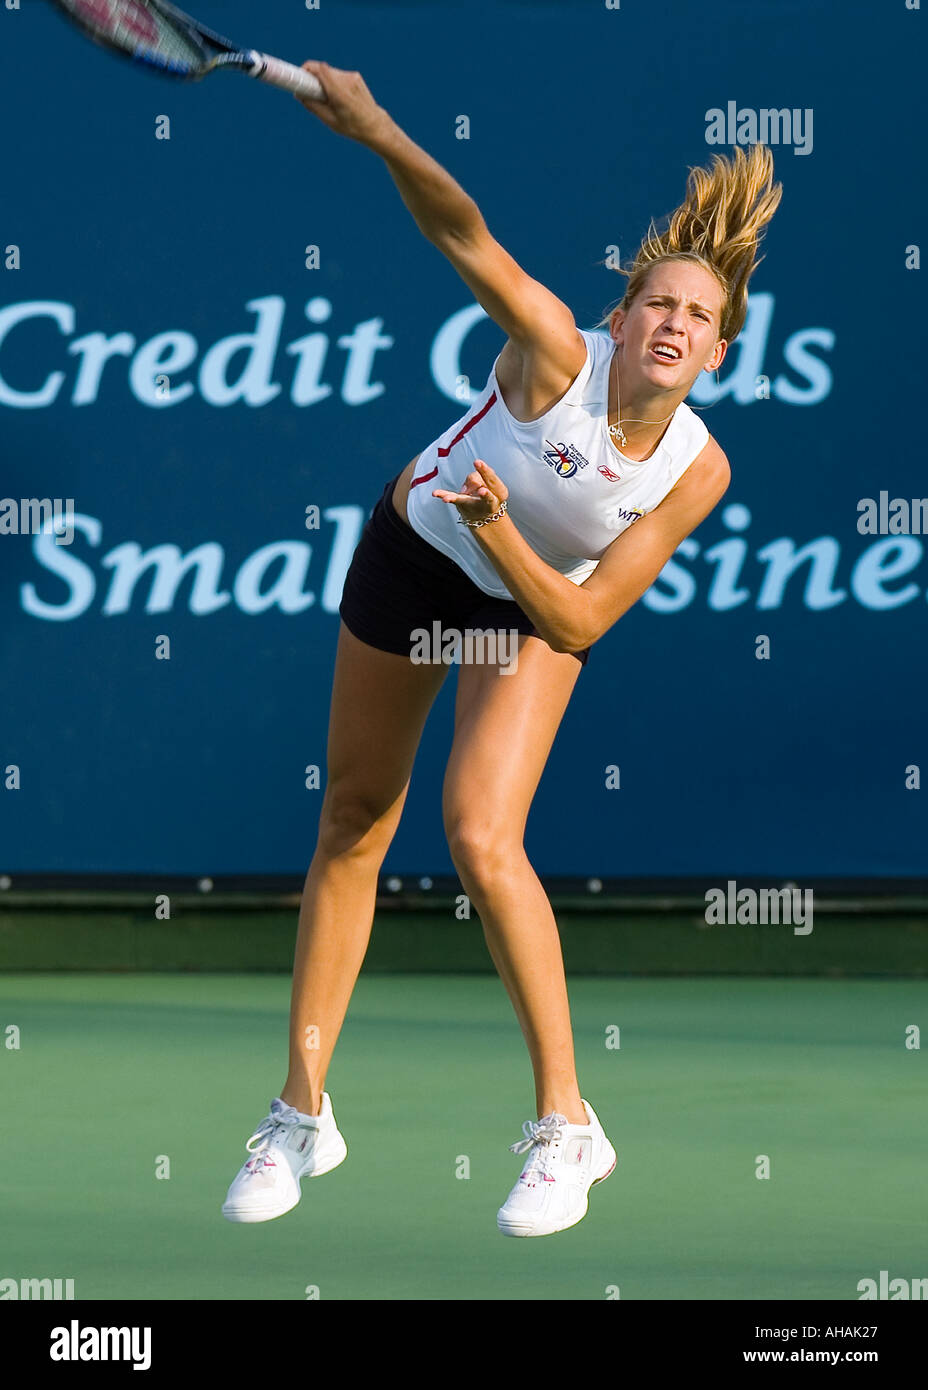 16-enne professionista WTA di tennis femminile star, Nicole VAIDISOVA serve  in WTT tennis a Palisades Club in Newport Beach Foto stock - Alamy